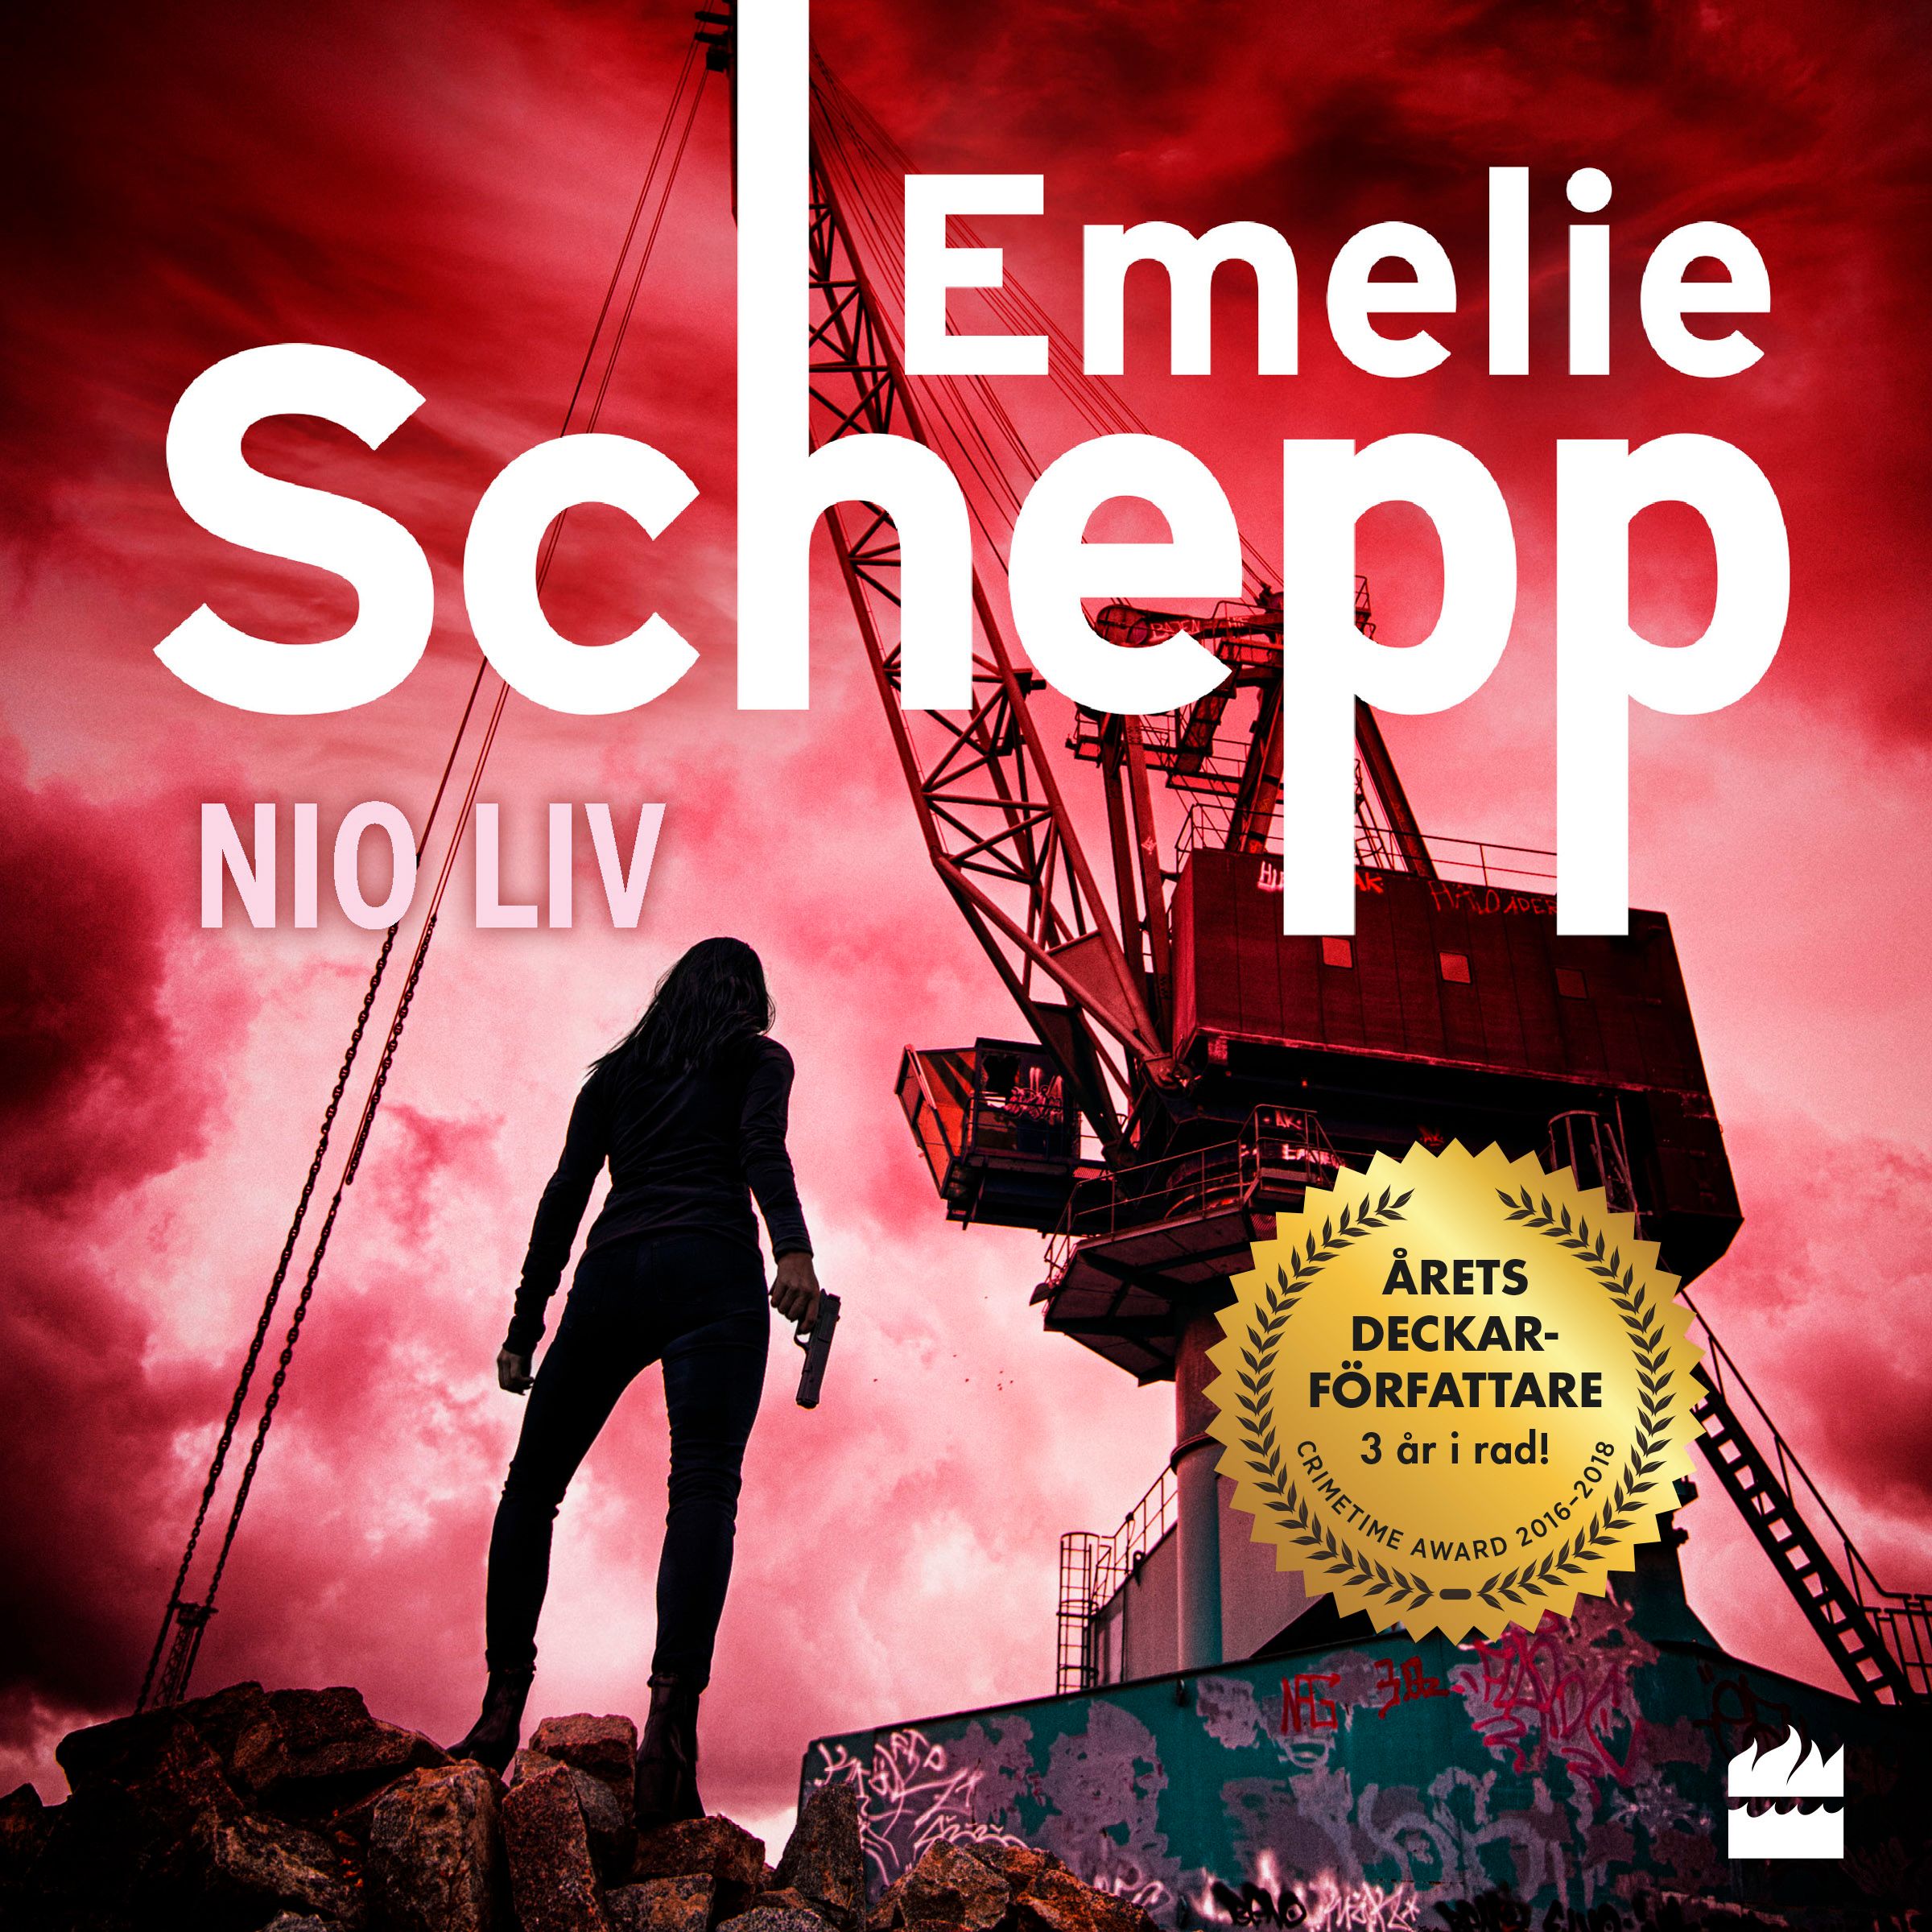 Nio liv, ljudbok av Emelie Schepp